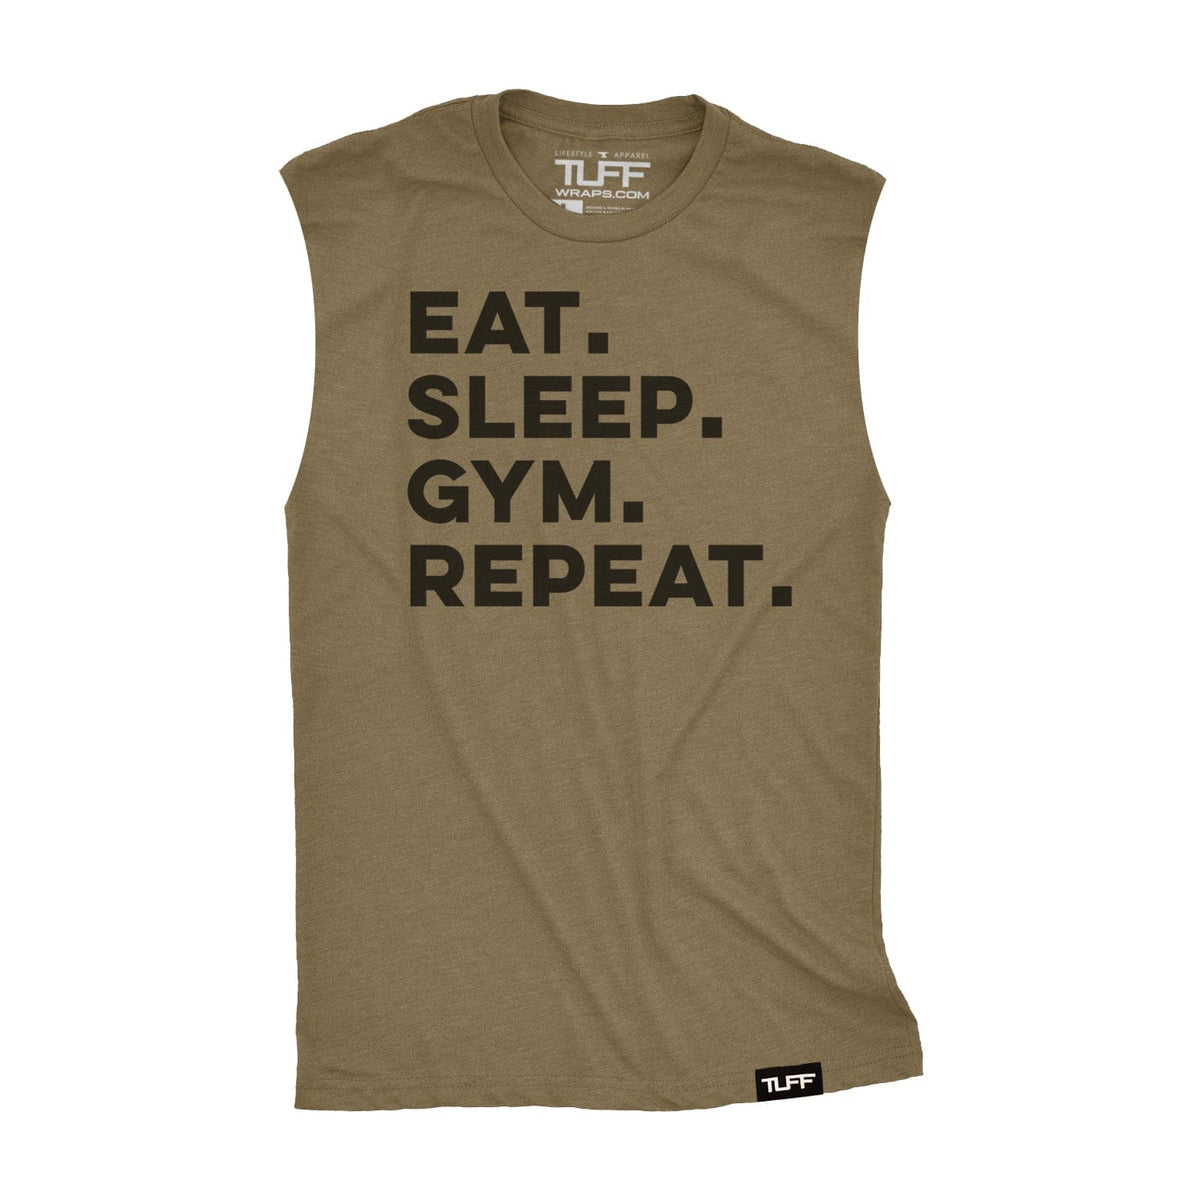 Eat. Sleep. Gym. Repeat. Raw Edge Muscle Tank S / Military Green TuffWraps.com